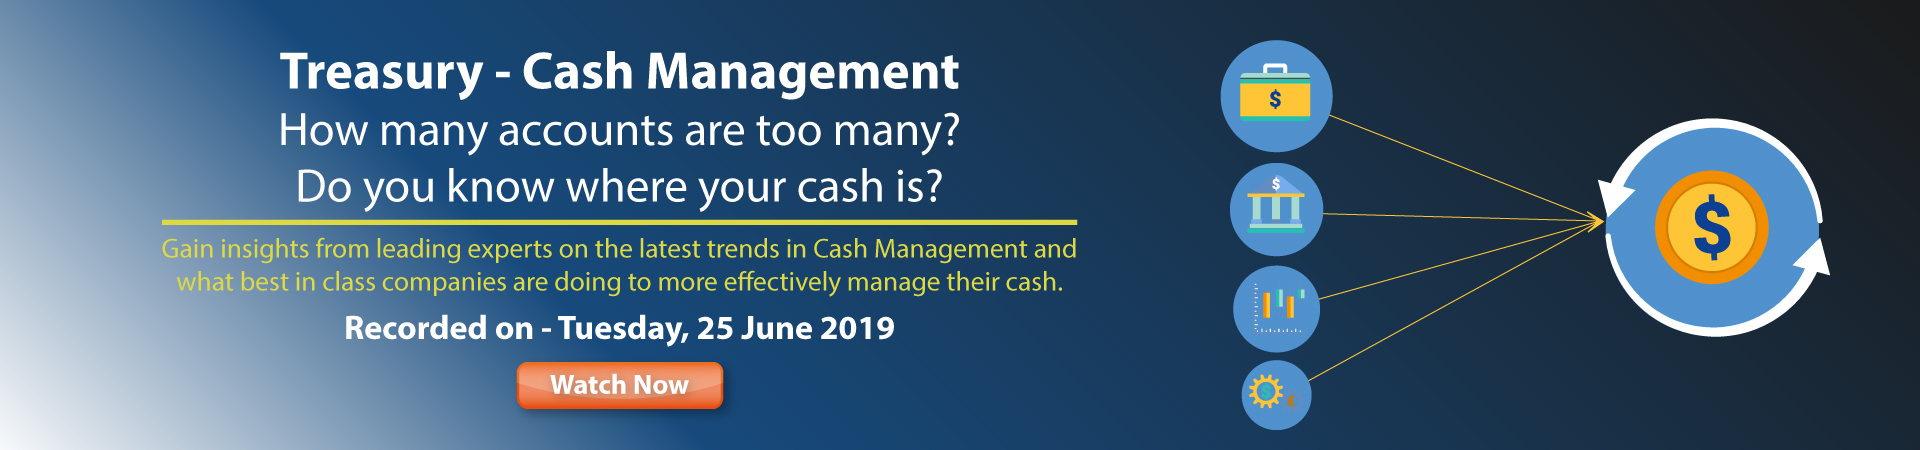 Treasury - Cash Management banner